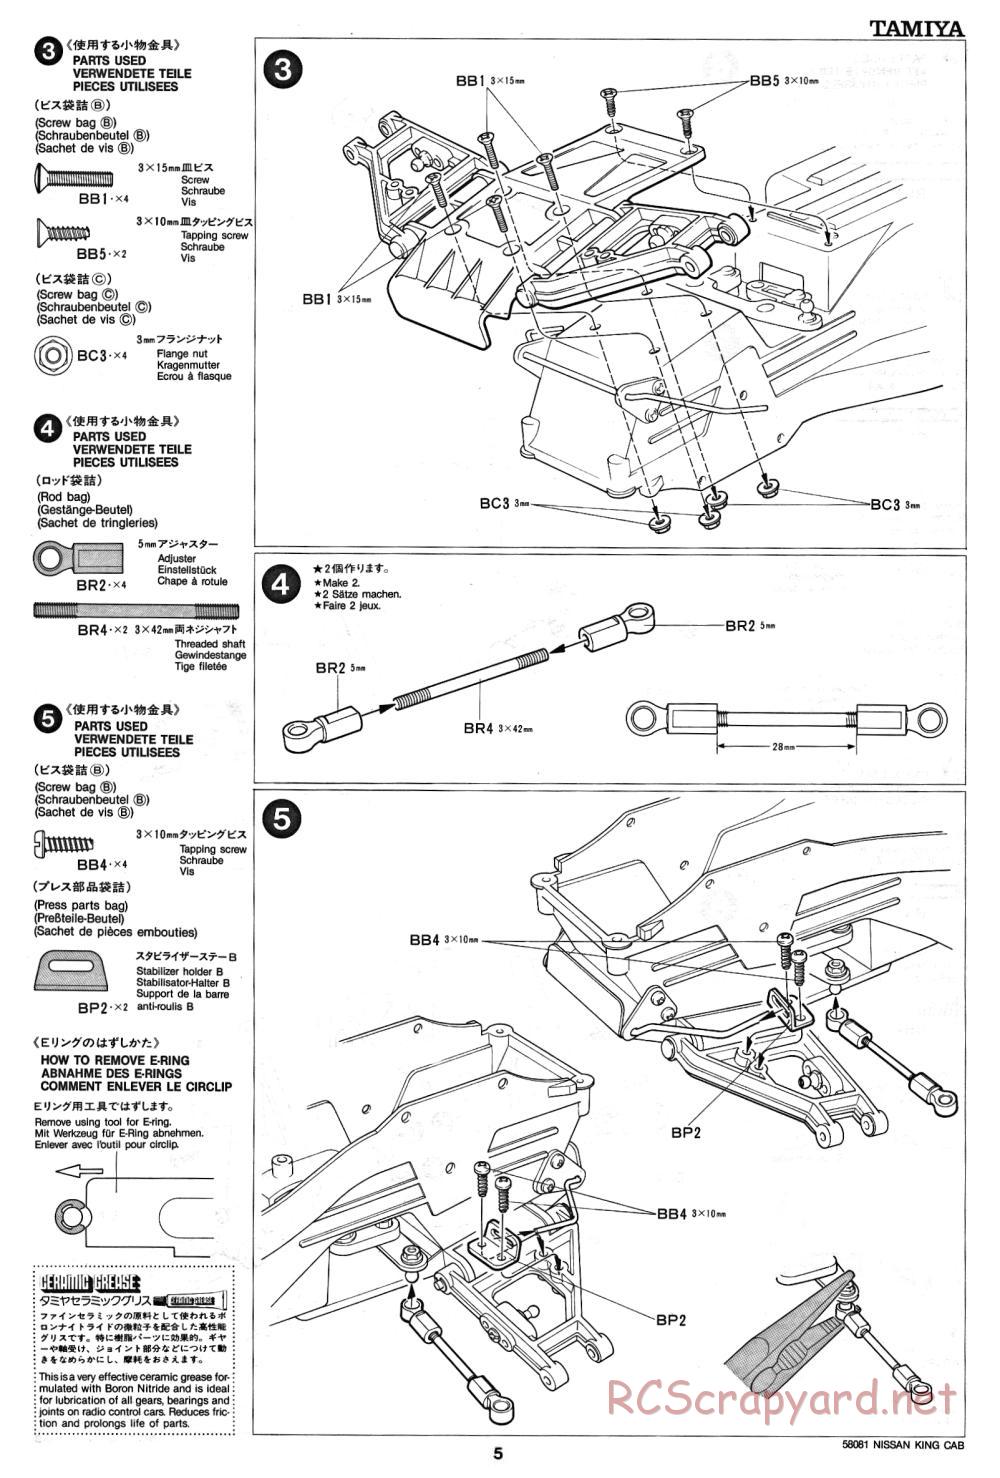 Tamiya - Nissan King Cab - 58081 - Manual - Page 5